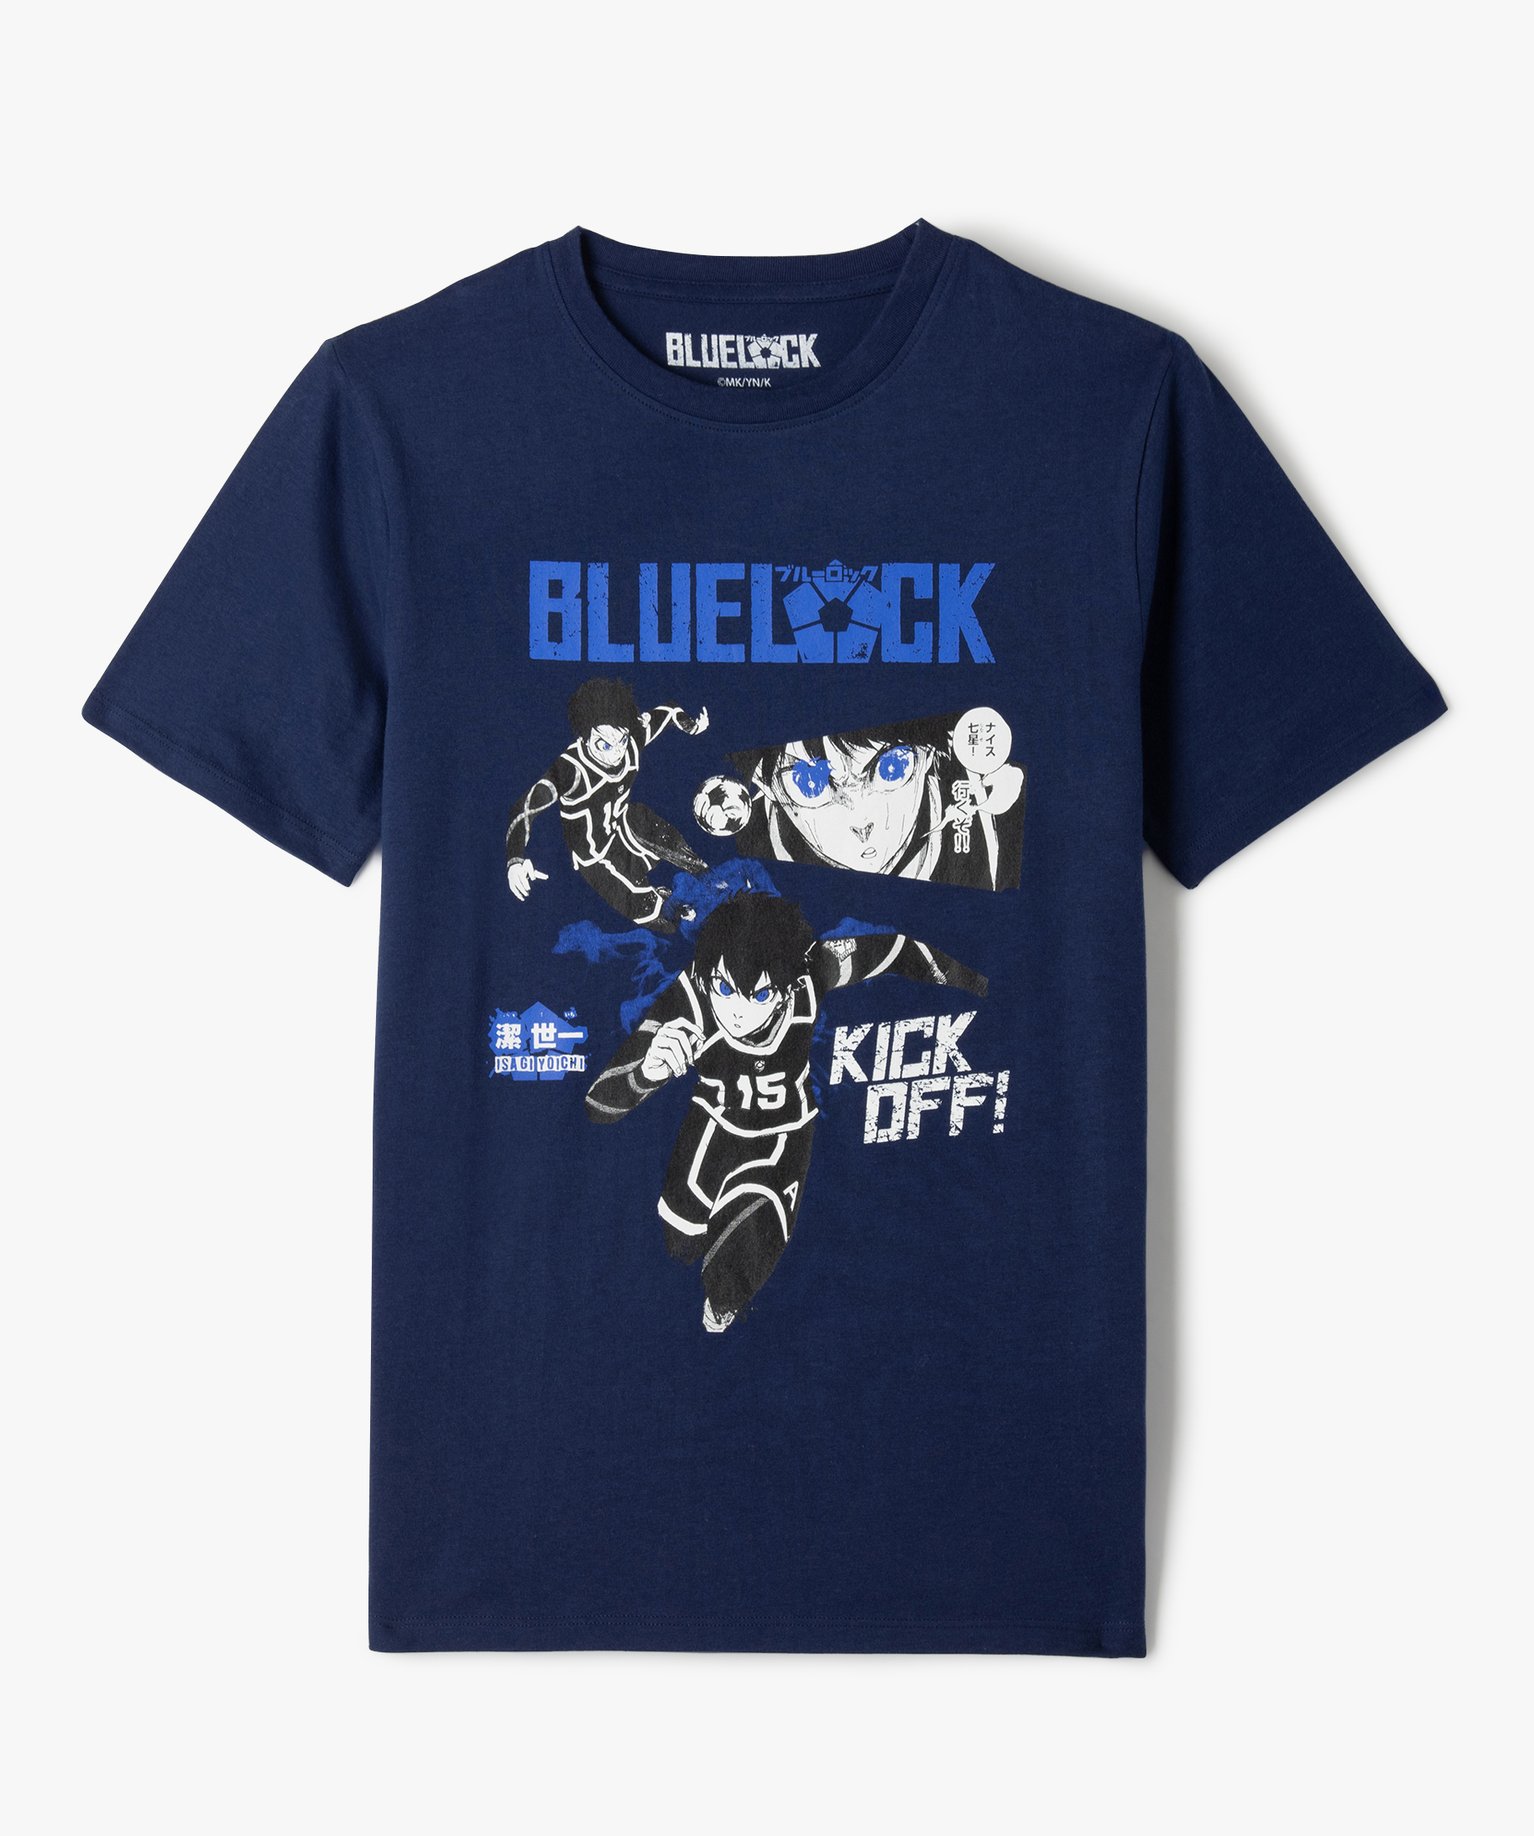 Tee-shirt à manches courtes avec motif manga garçon - Blue Lock - 10 - marine - BLUE LOCK